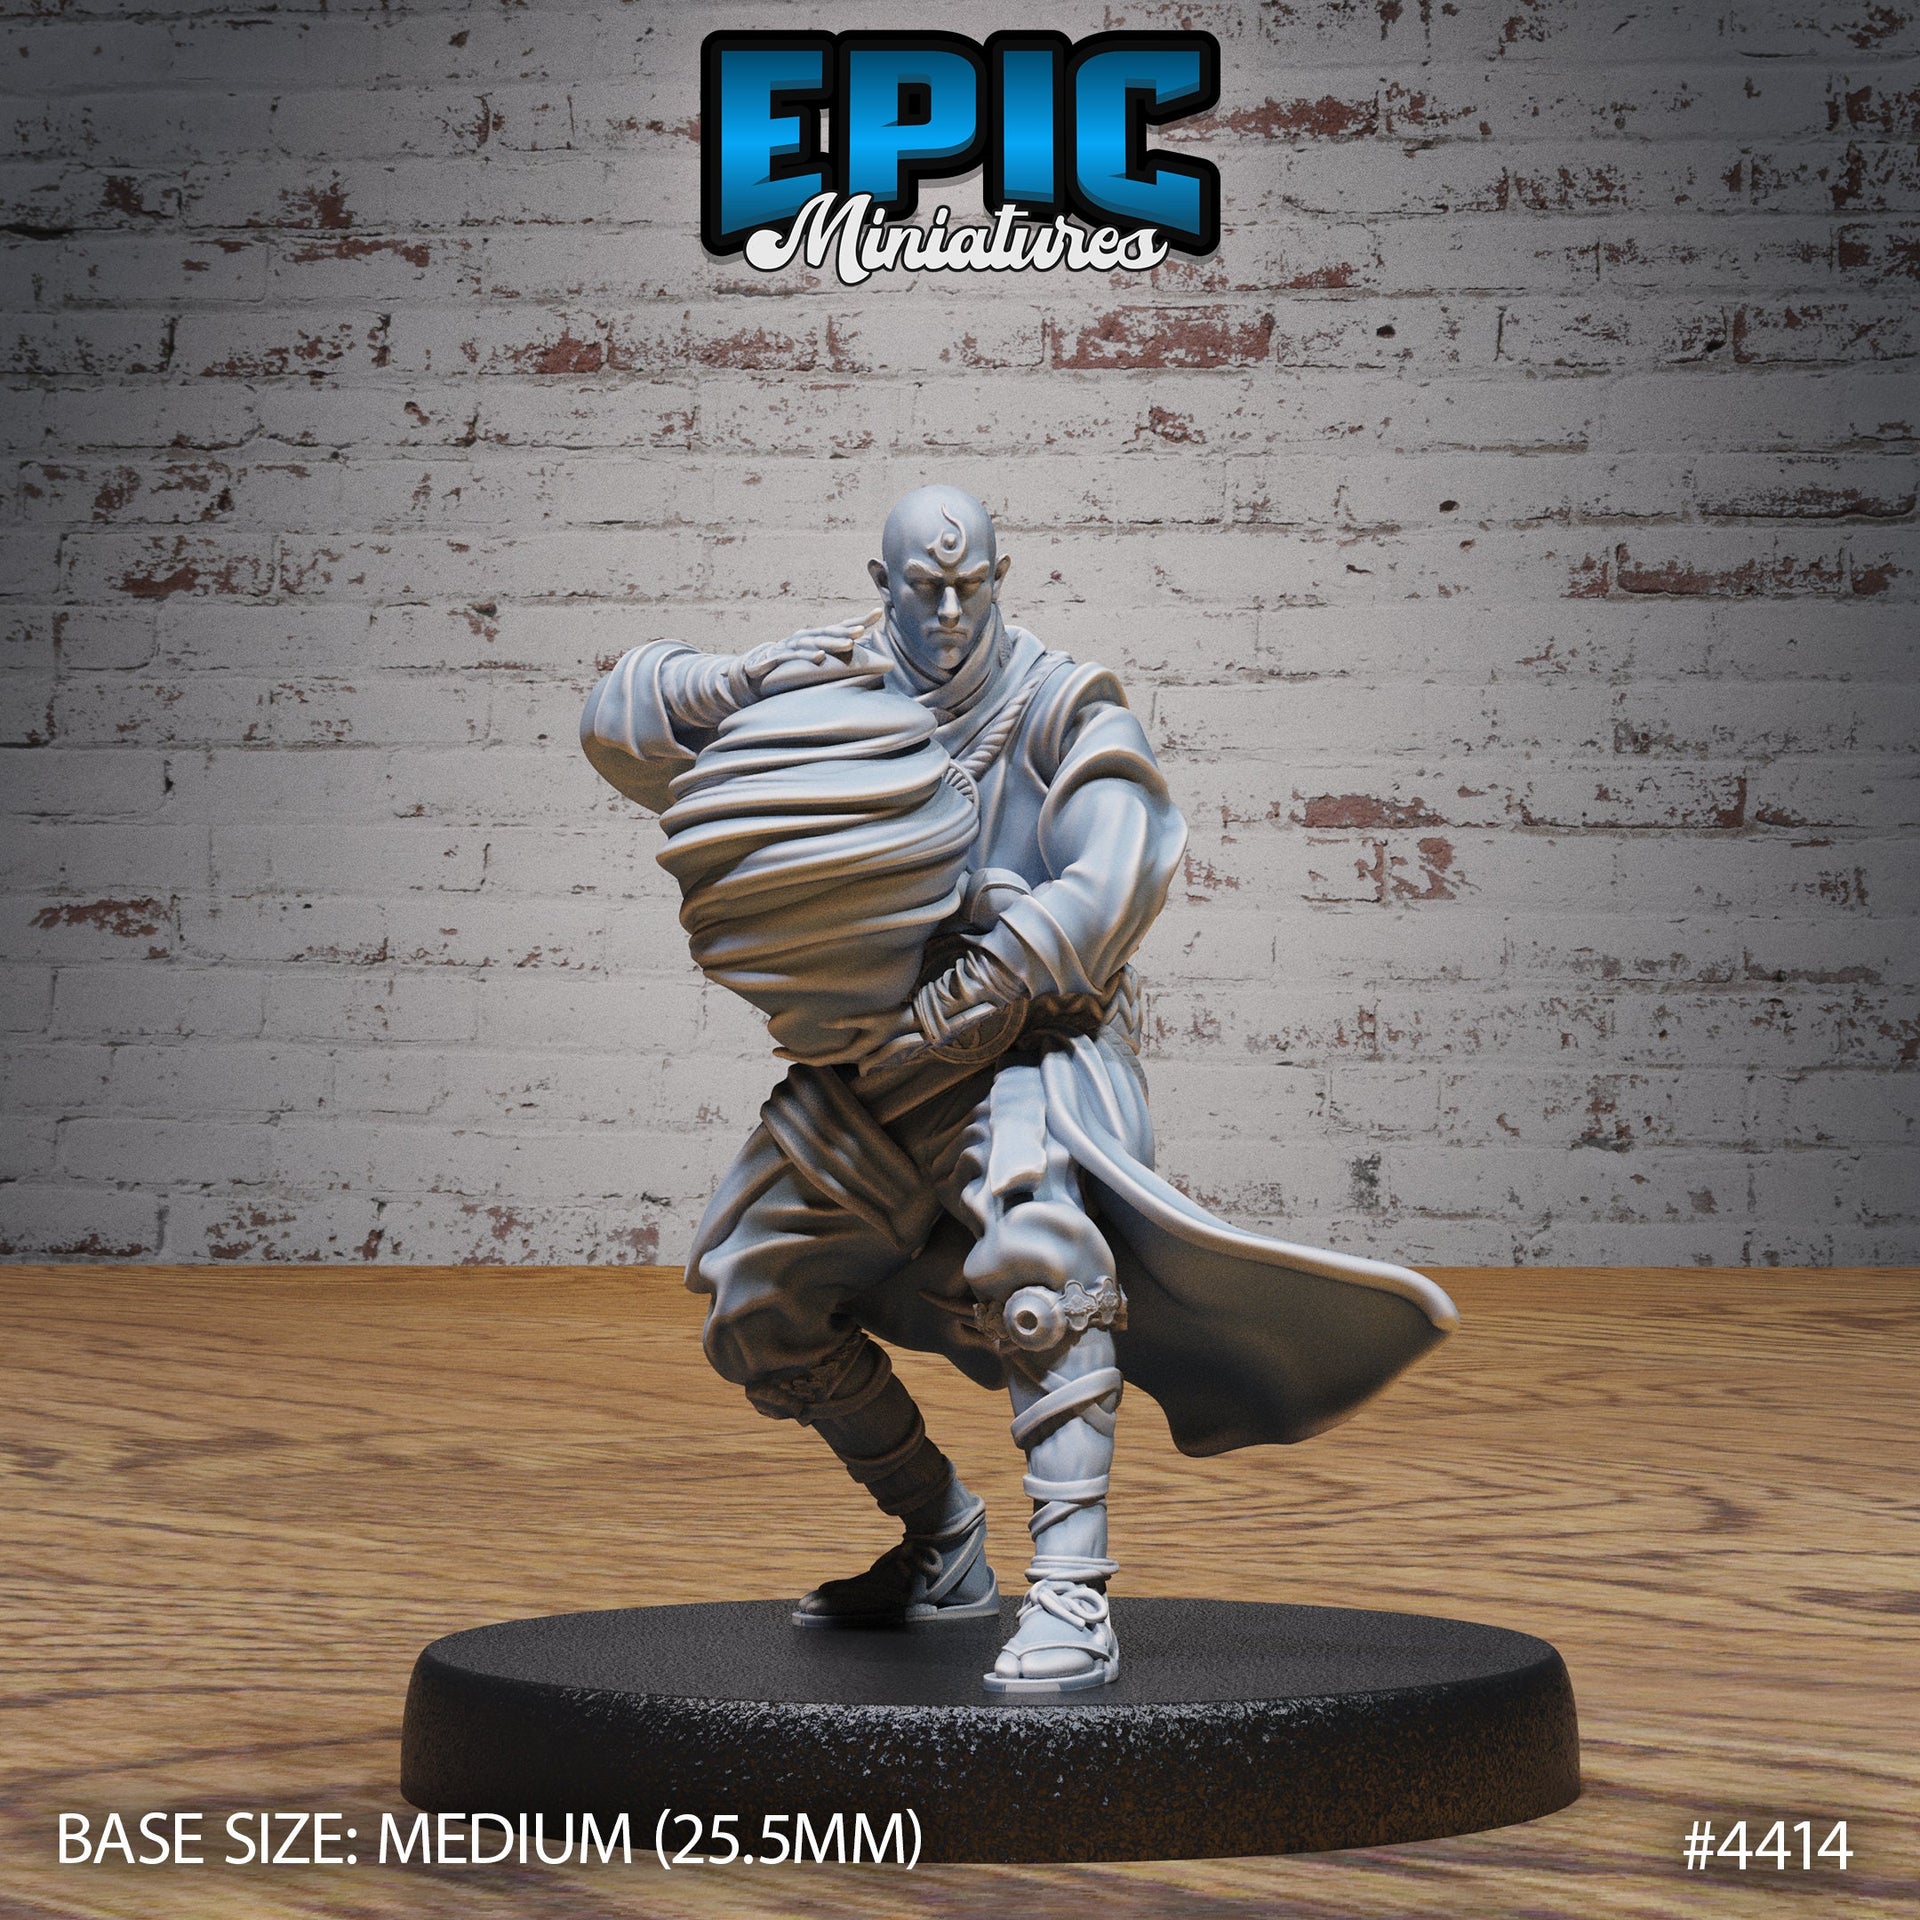 Element Monk Air - Epic Miniatures | Mighty Heroes | 28mm | 32mm | Sorcerer | PC | Traveler | Elementalist